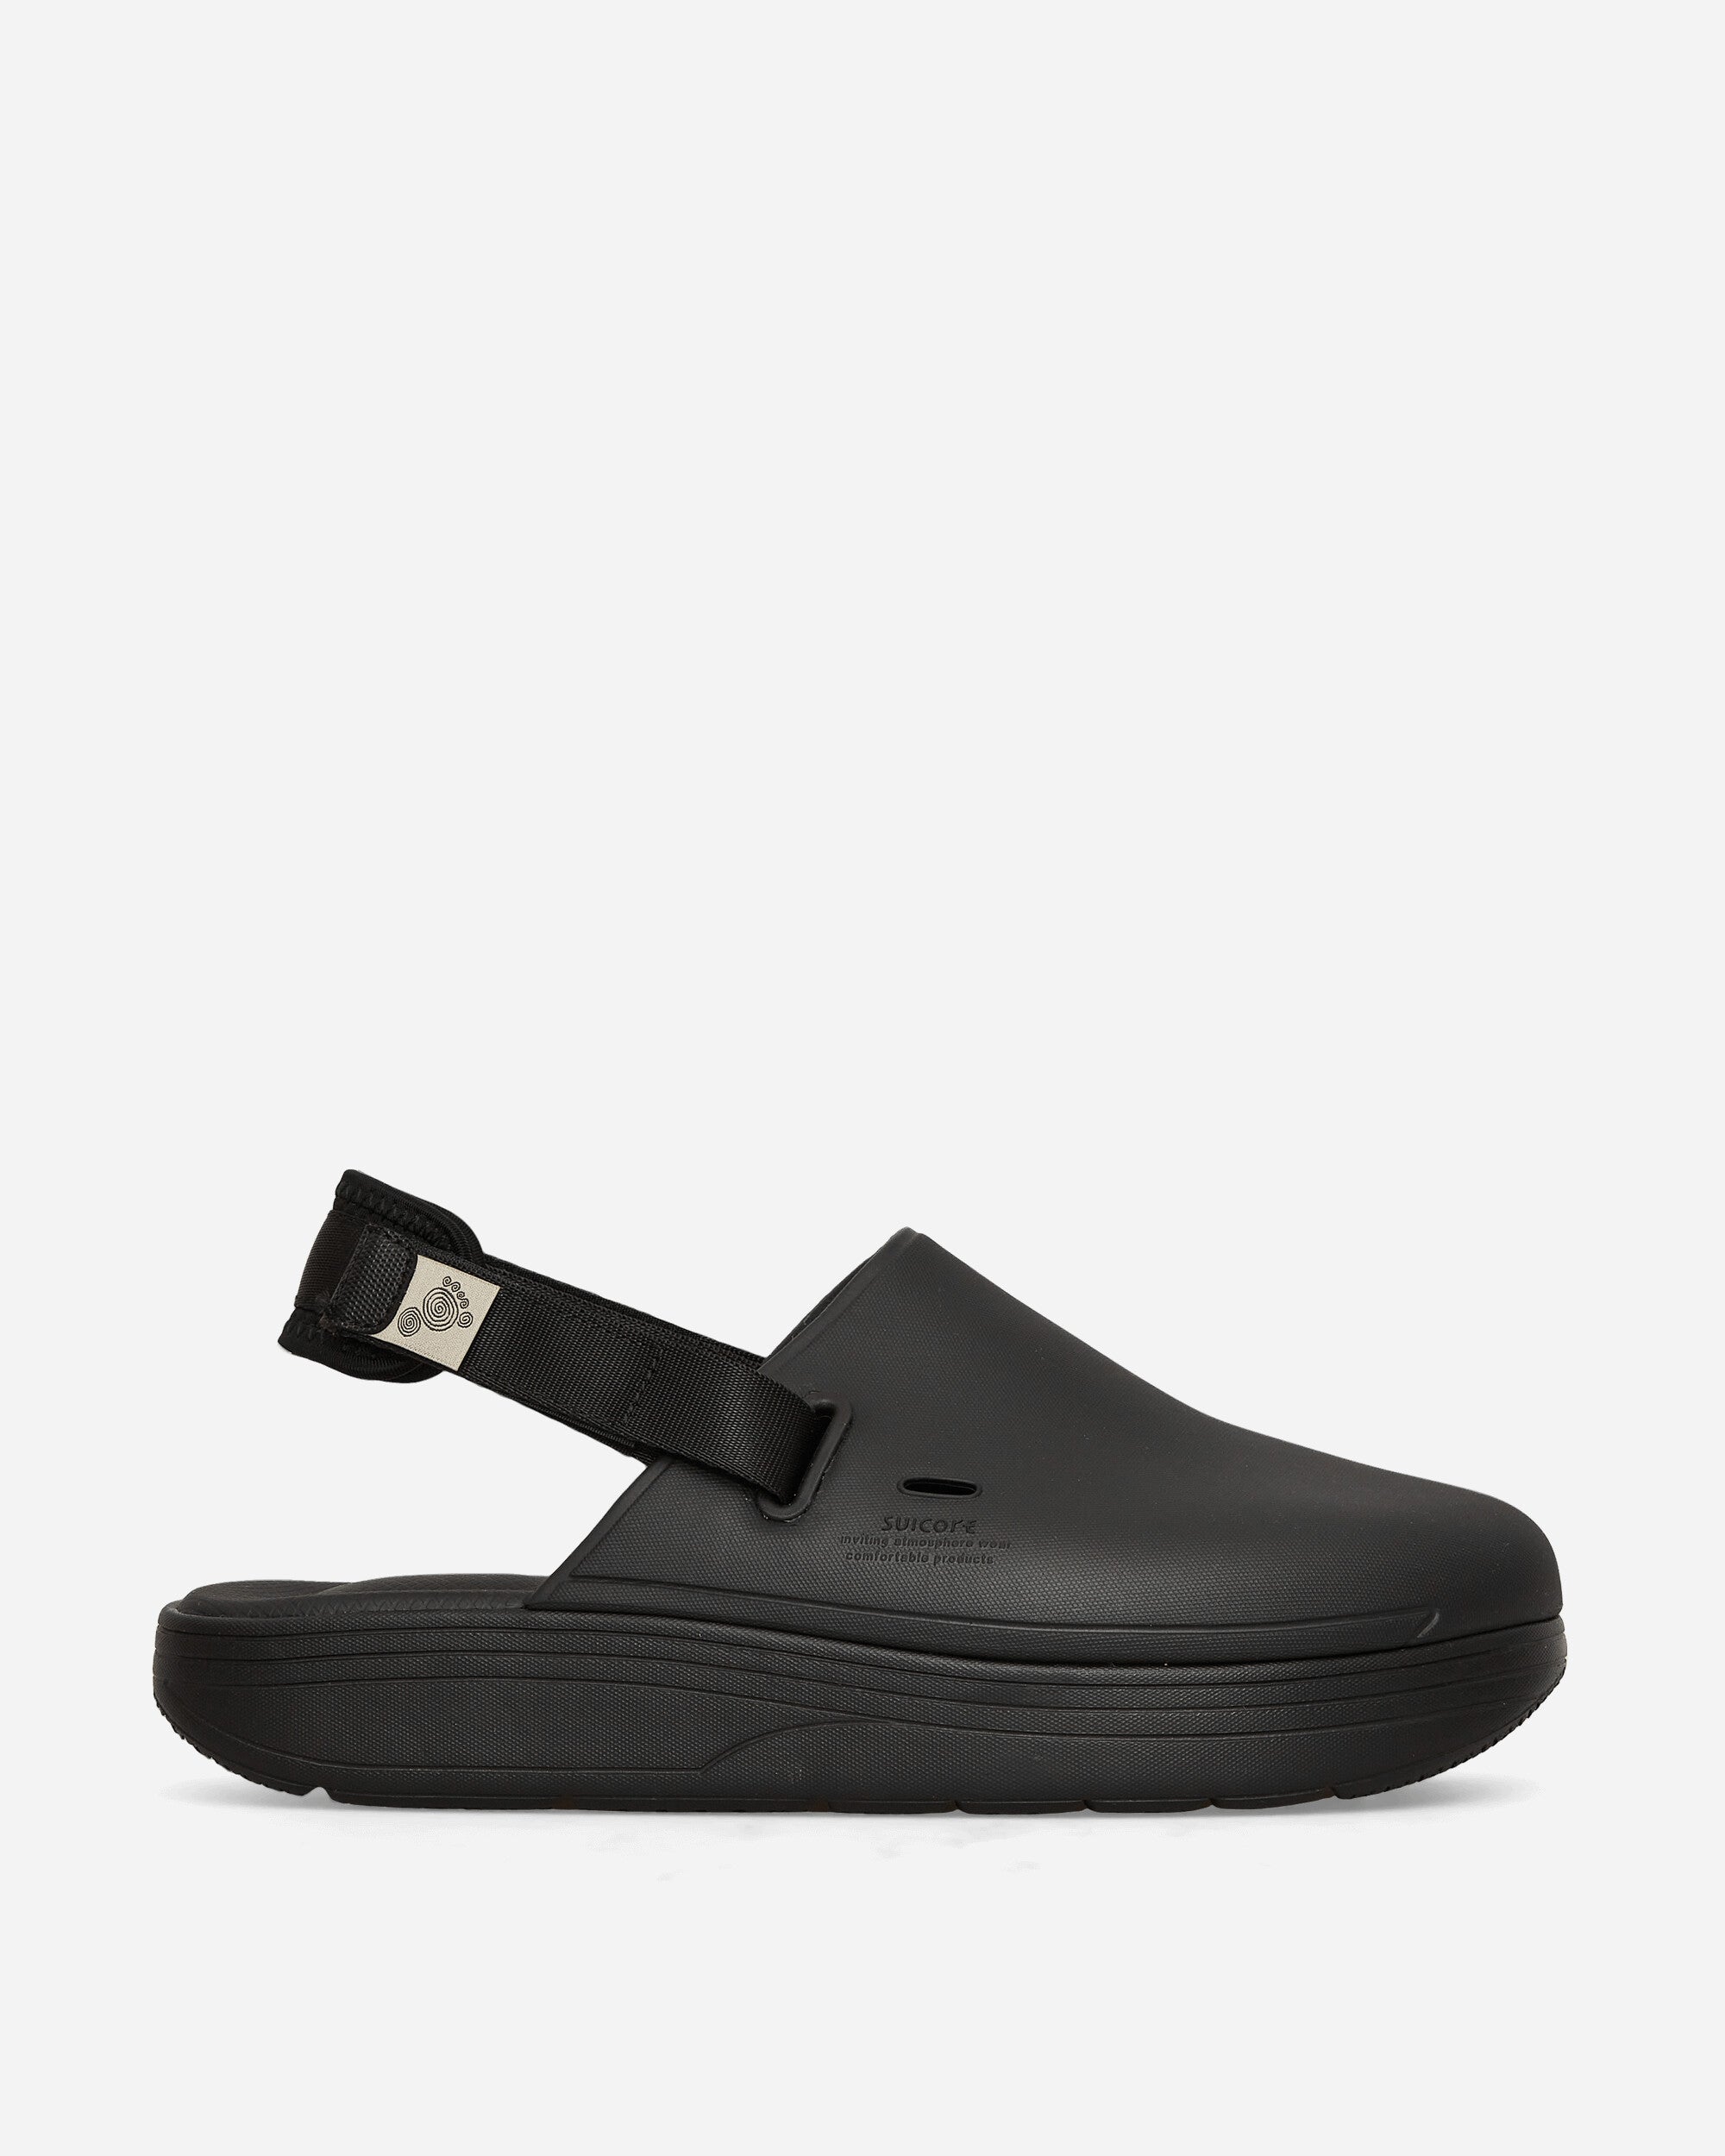 Suicoke Cappo Black Sandals and Slides Sandals and Mules OGINJ03 BLK